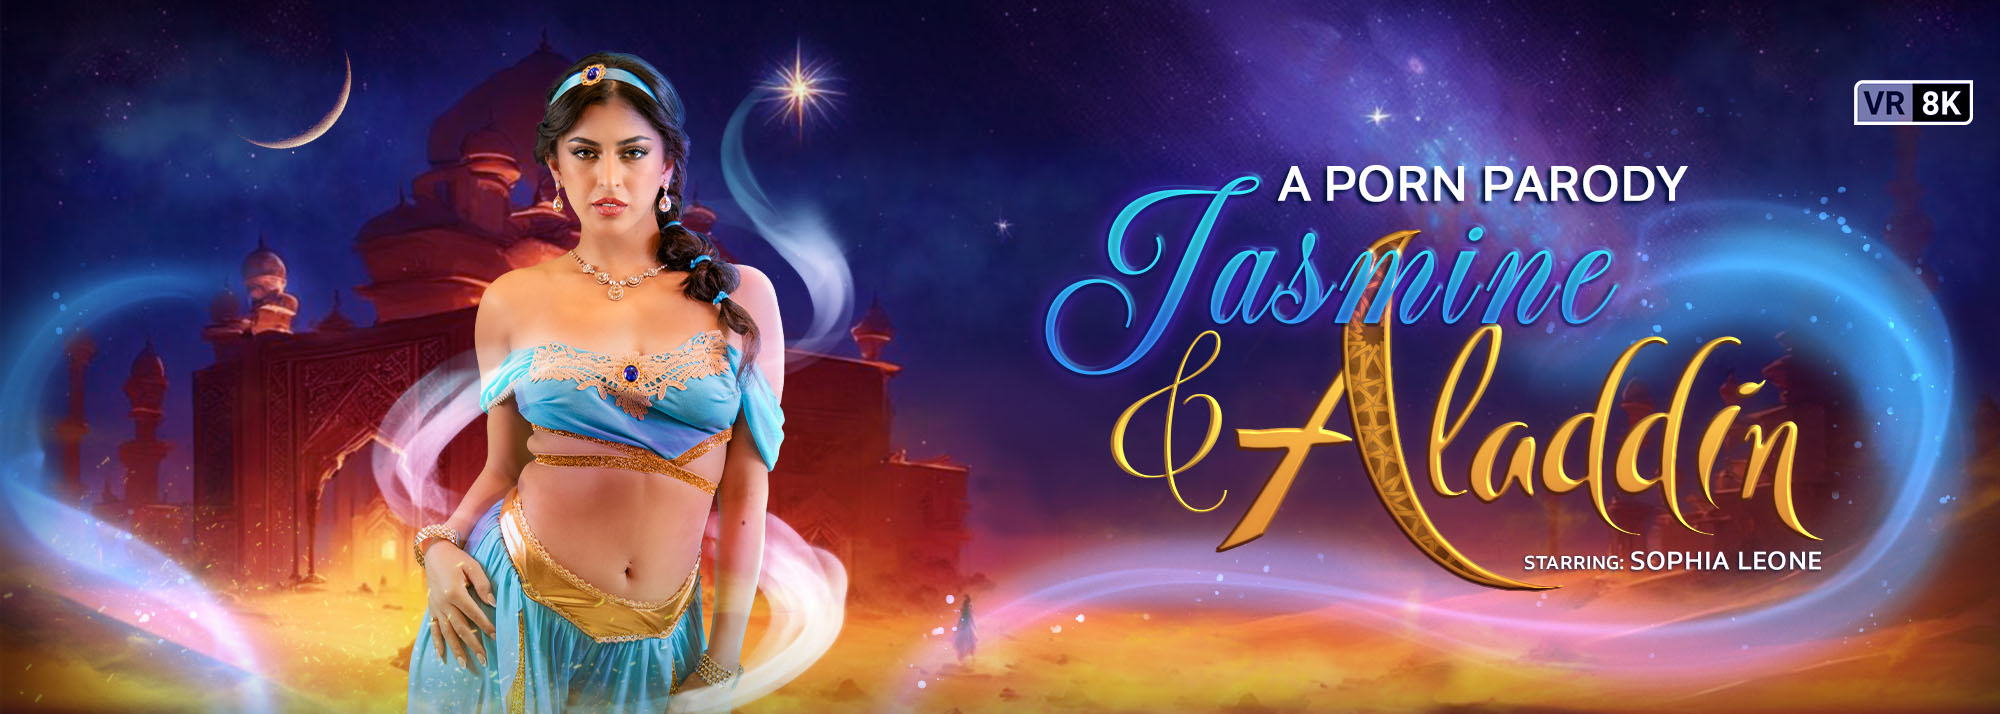 Aladdin Cartoon Porno - Jasmine & Aladdin (A Porn Parody) - Cosplay VR Porn Video | VR Conk